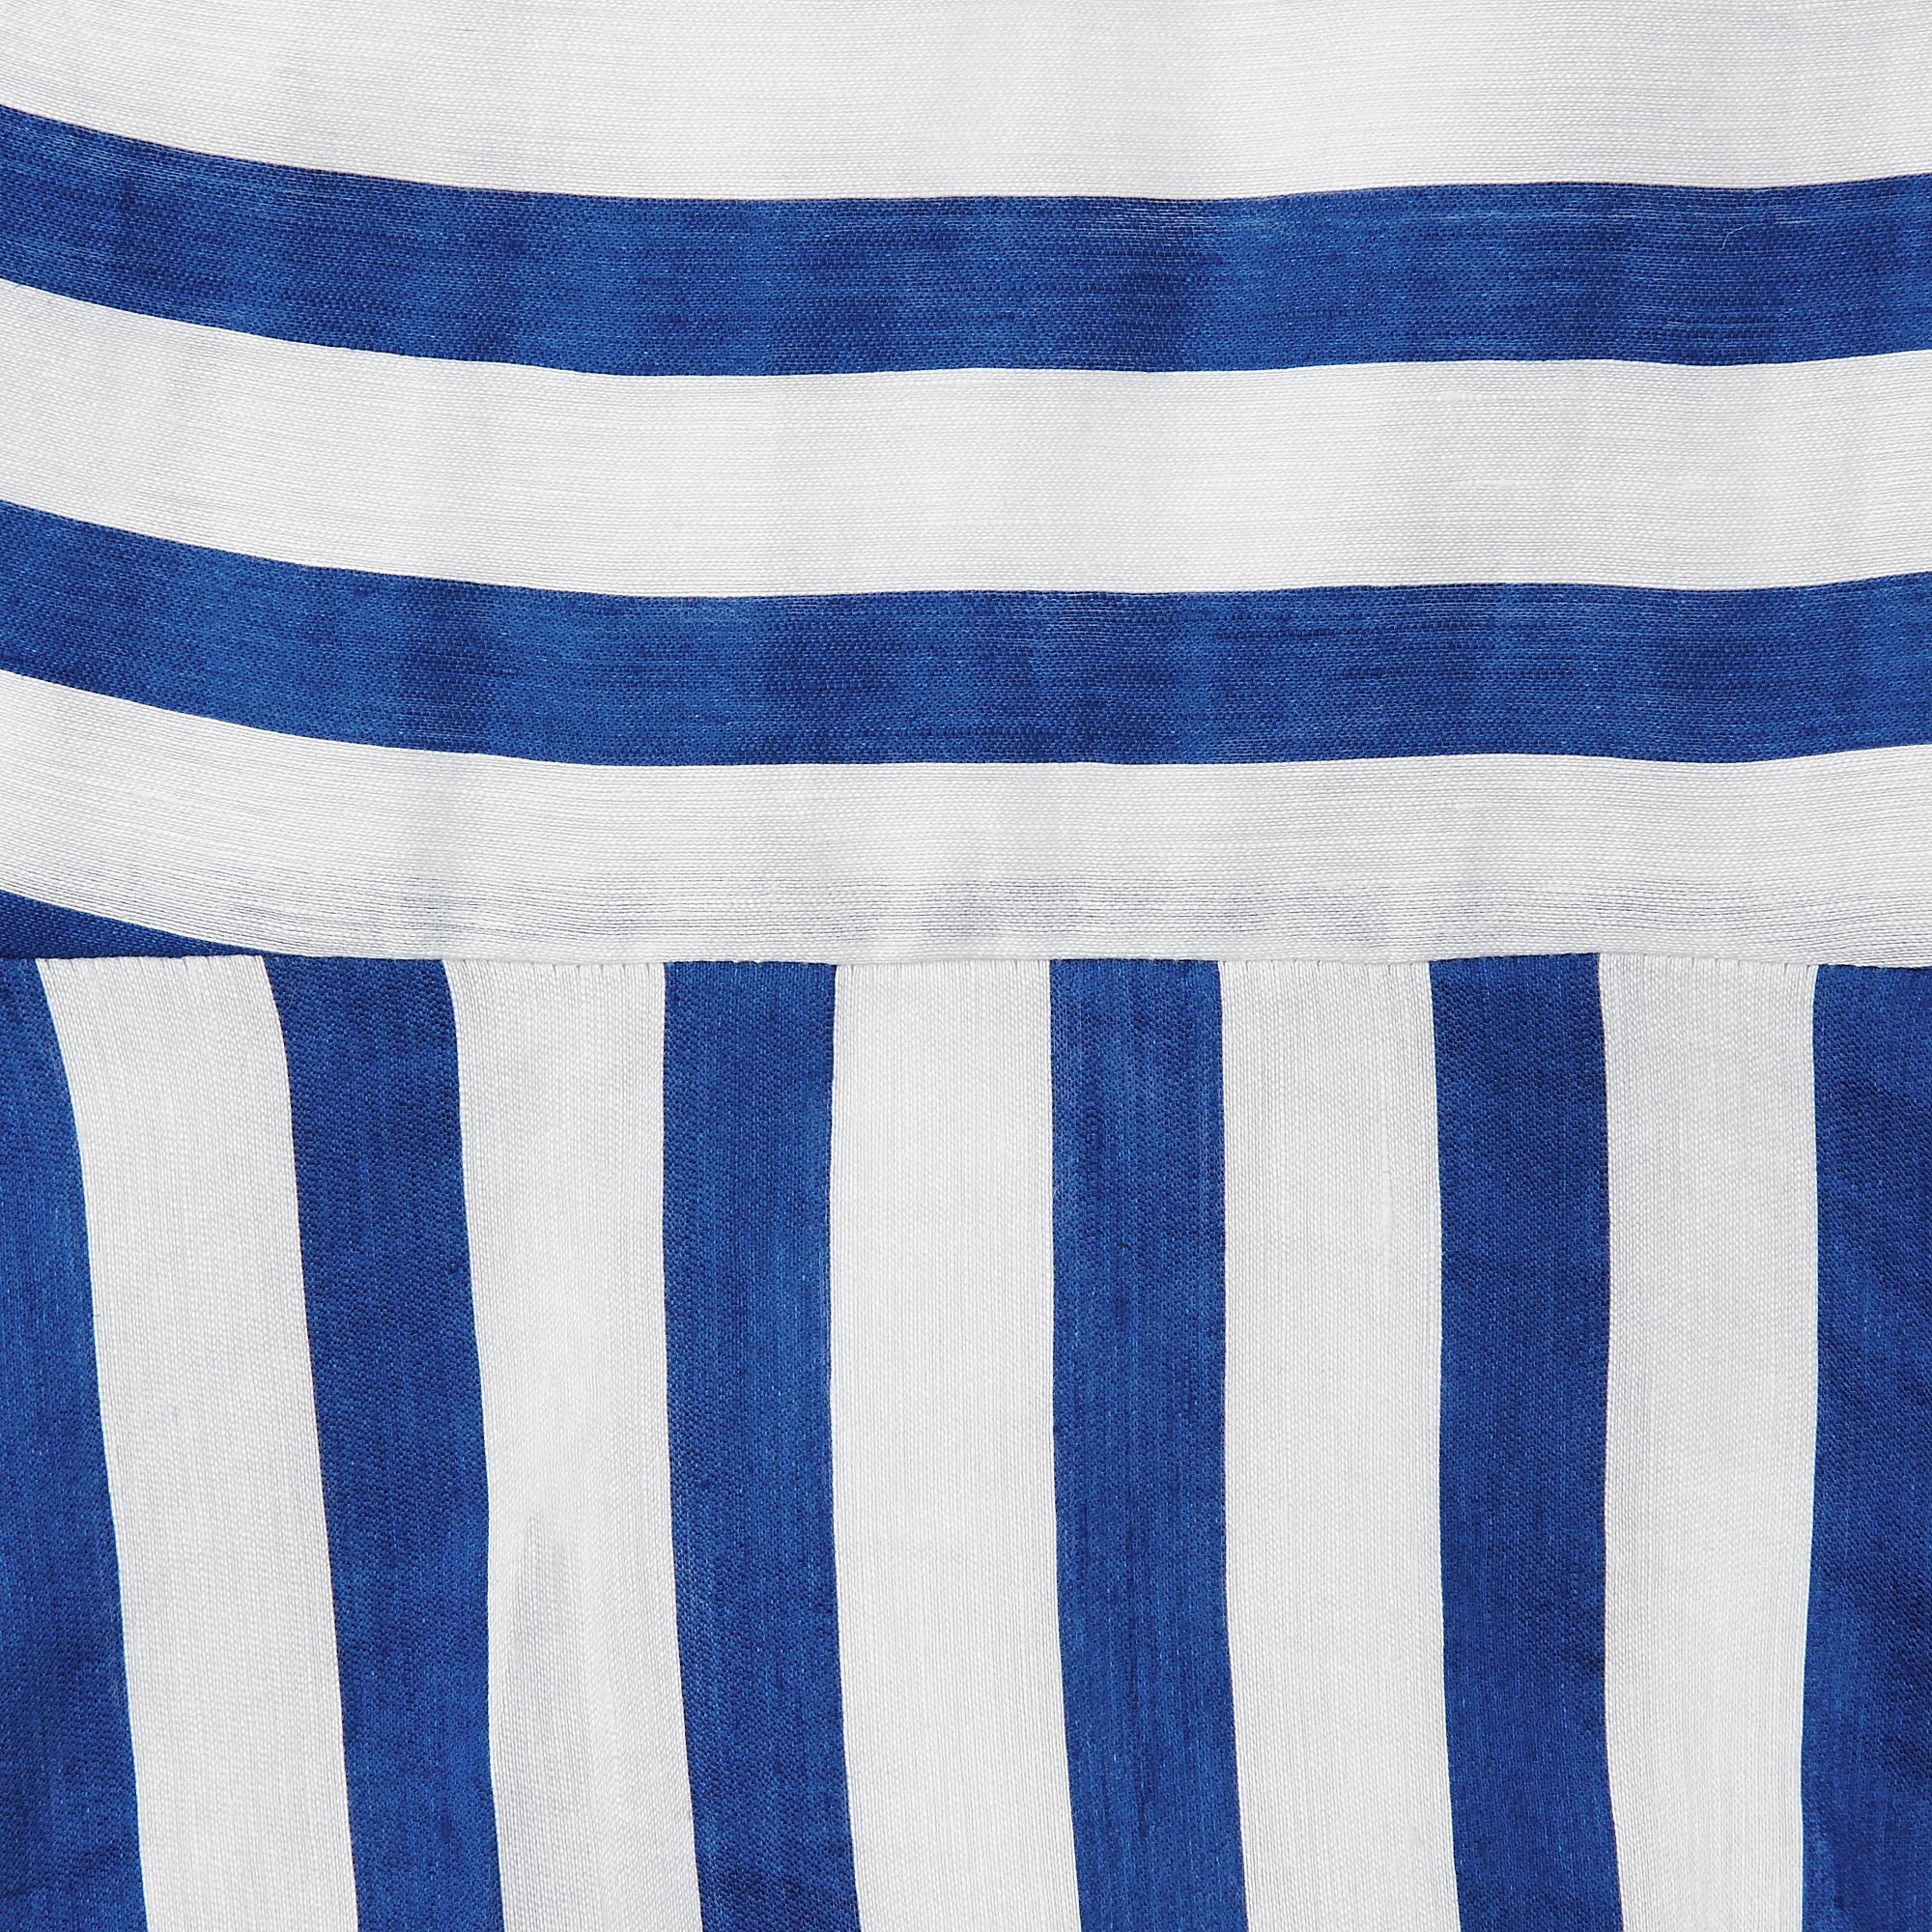 L.K. Bennett Harpa Striped Dress, Blue/White